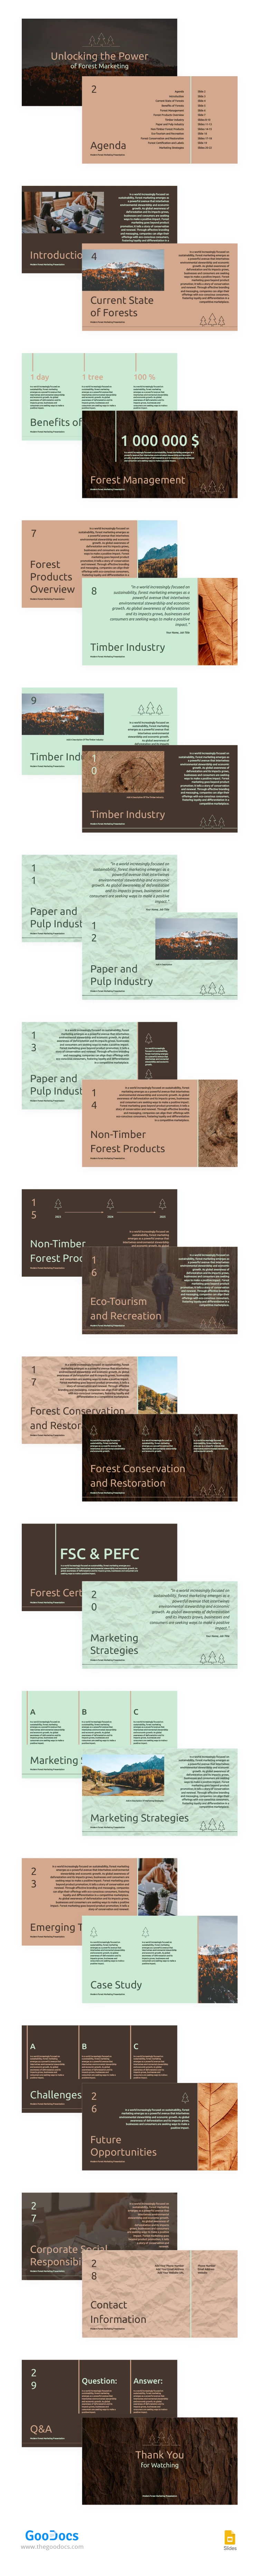 Marketing Forestal Moderno - free Google Docs Template - 10067032